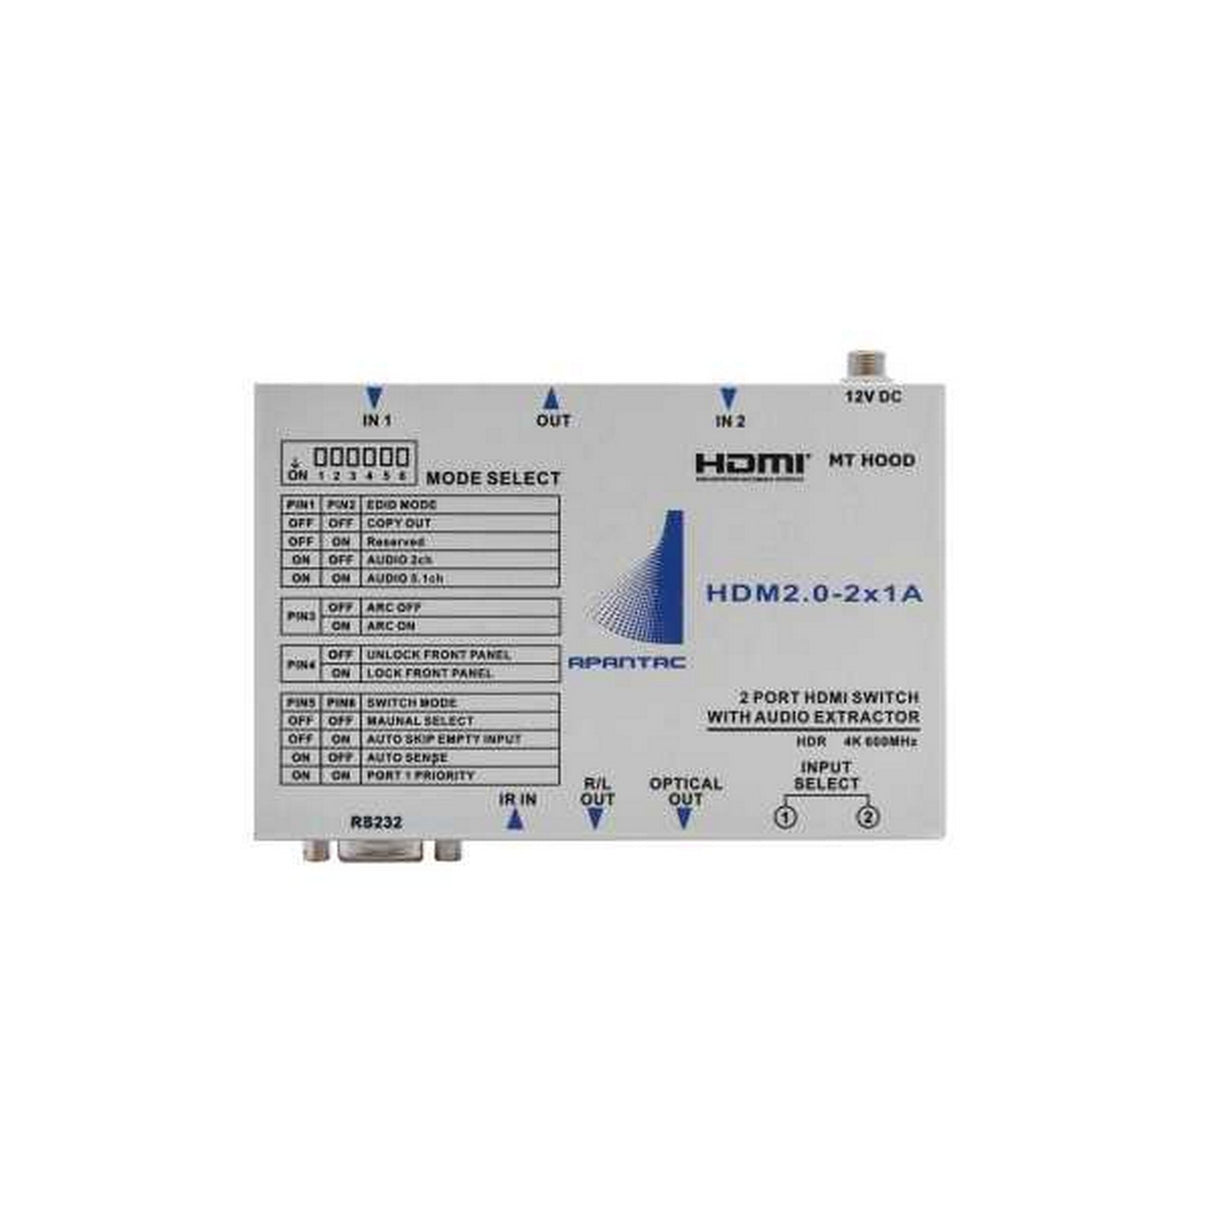 Apantac HDM2.0-2x1A 2 x 1 HDMI 2.0 Switch